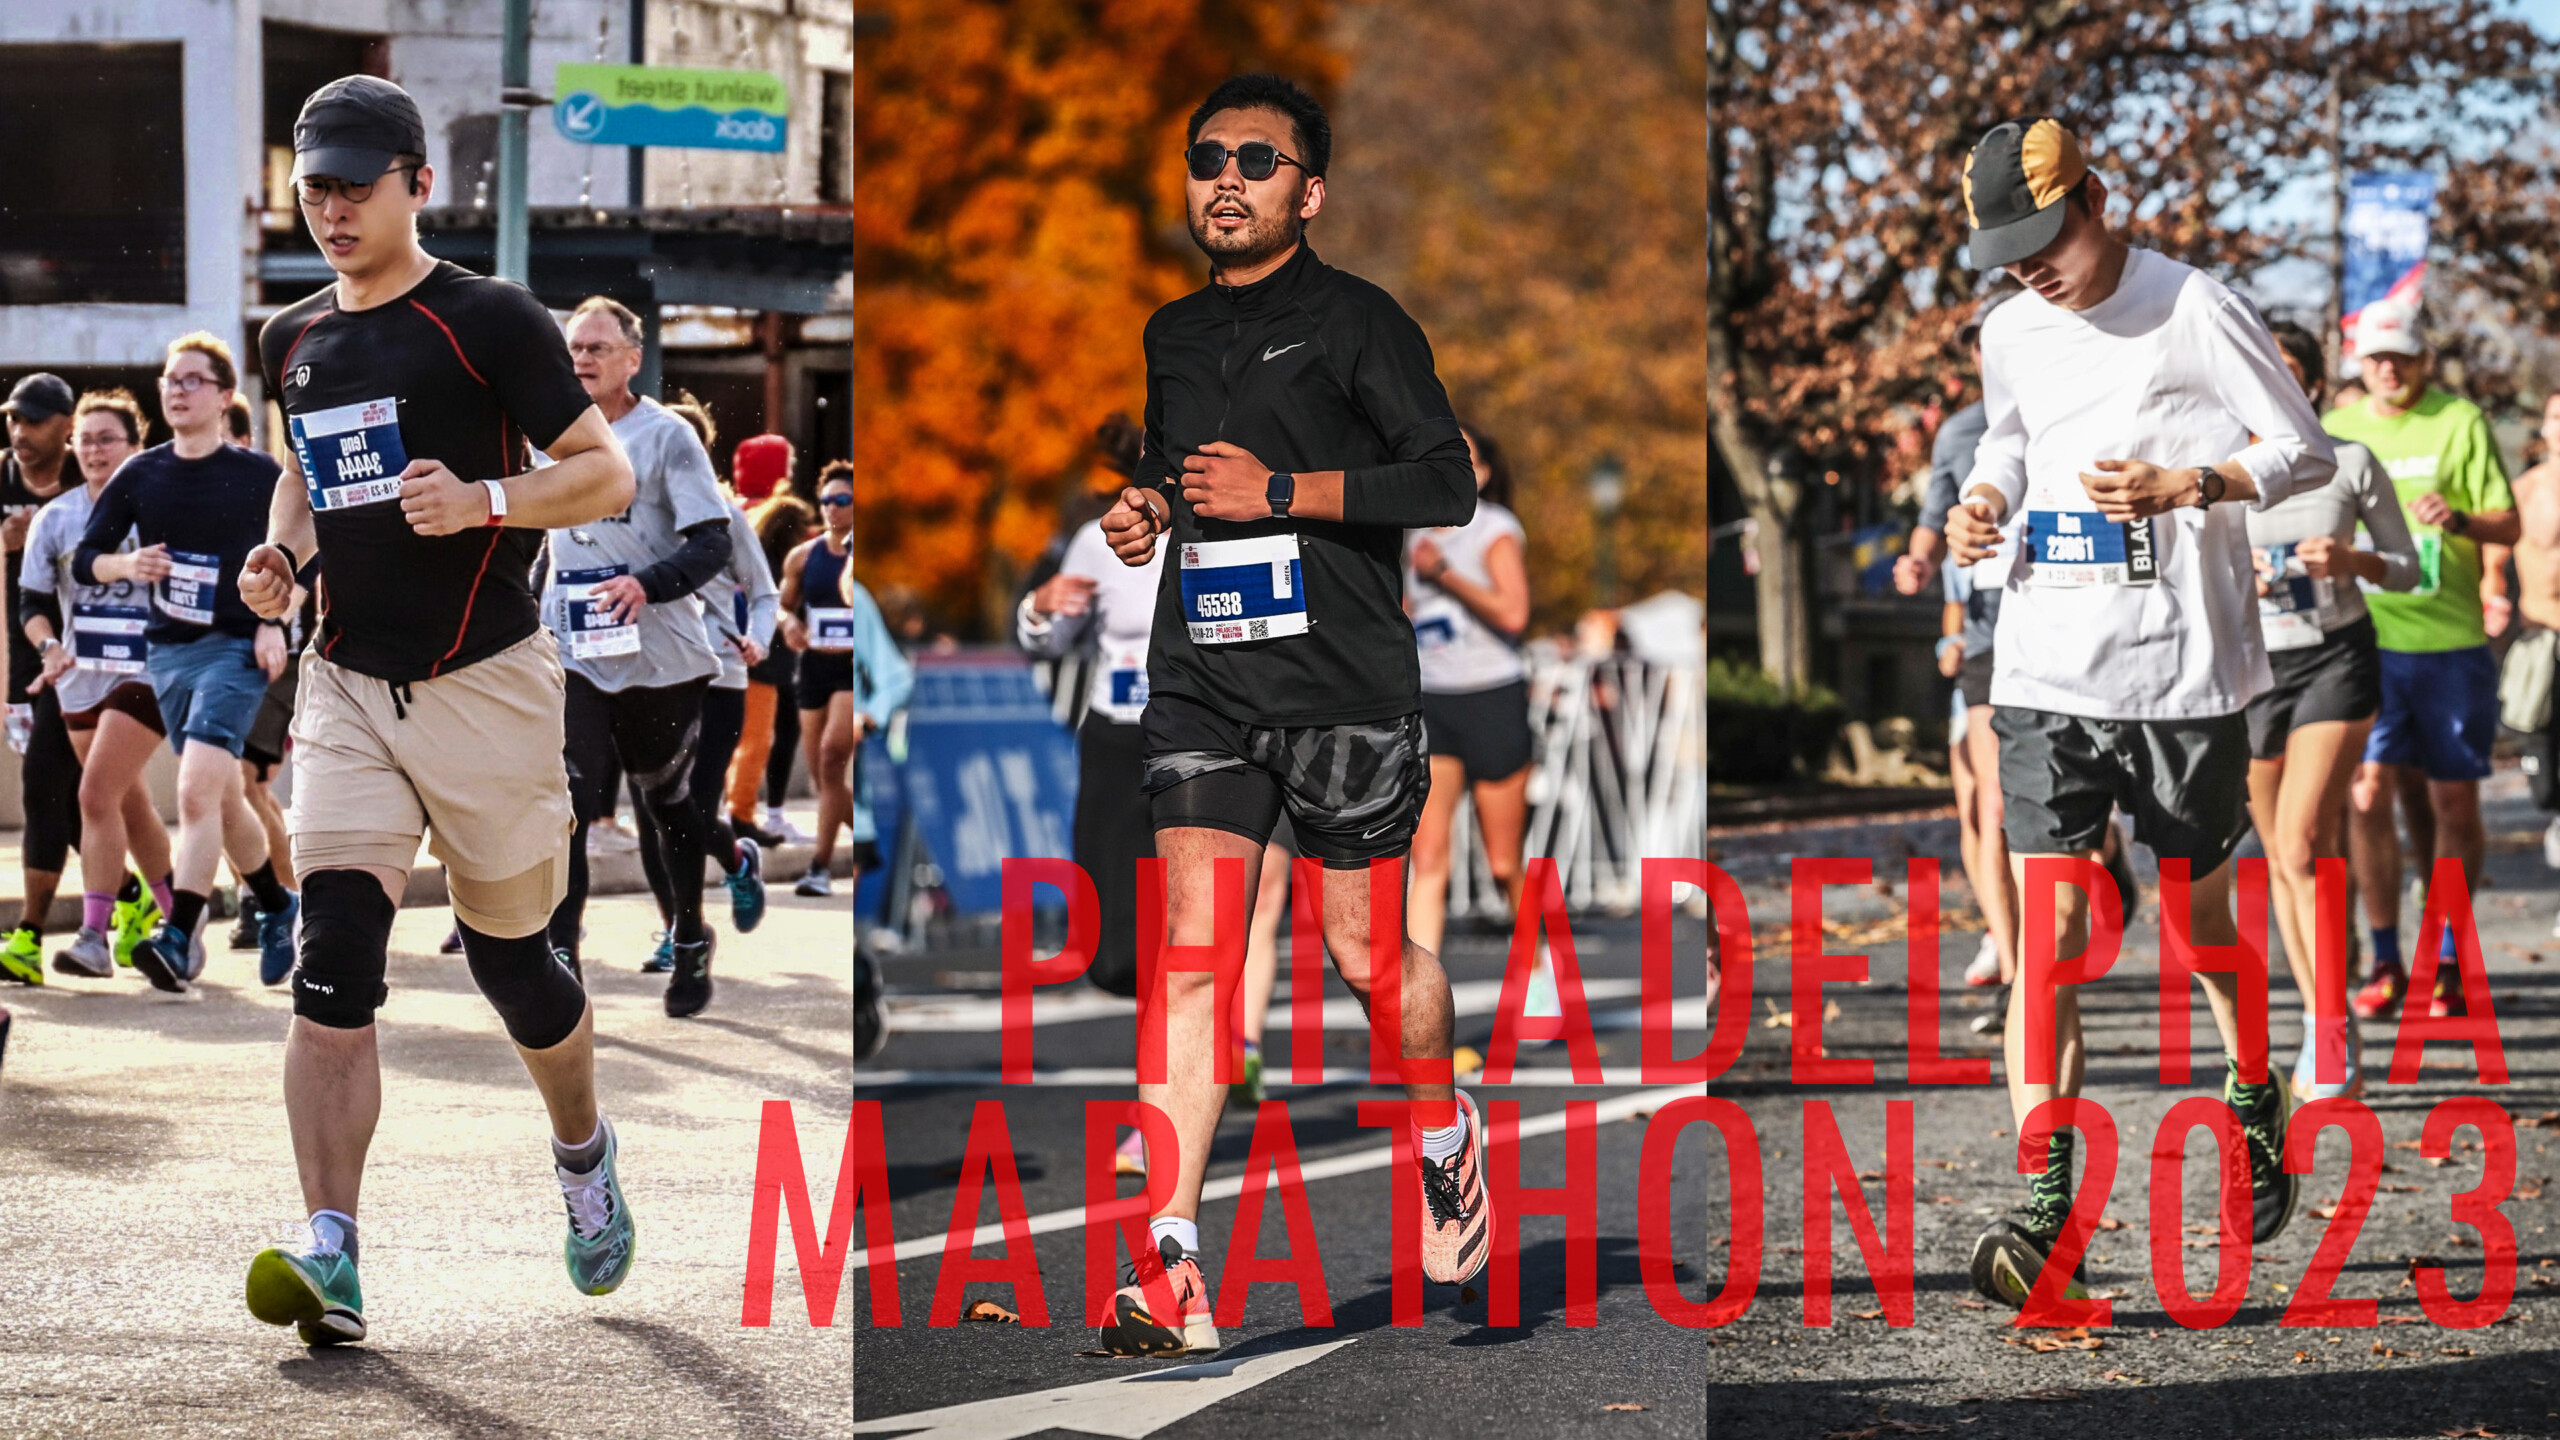 PhD students in the Philadelphia Marathon